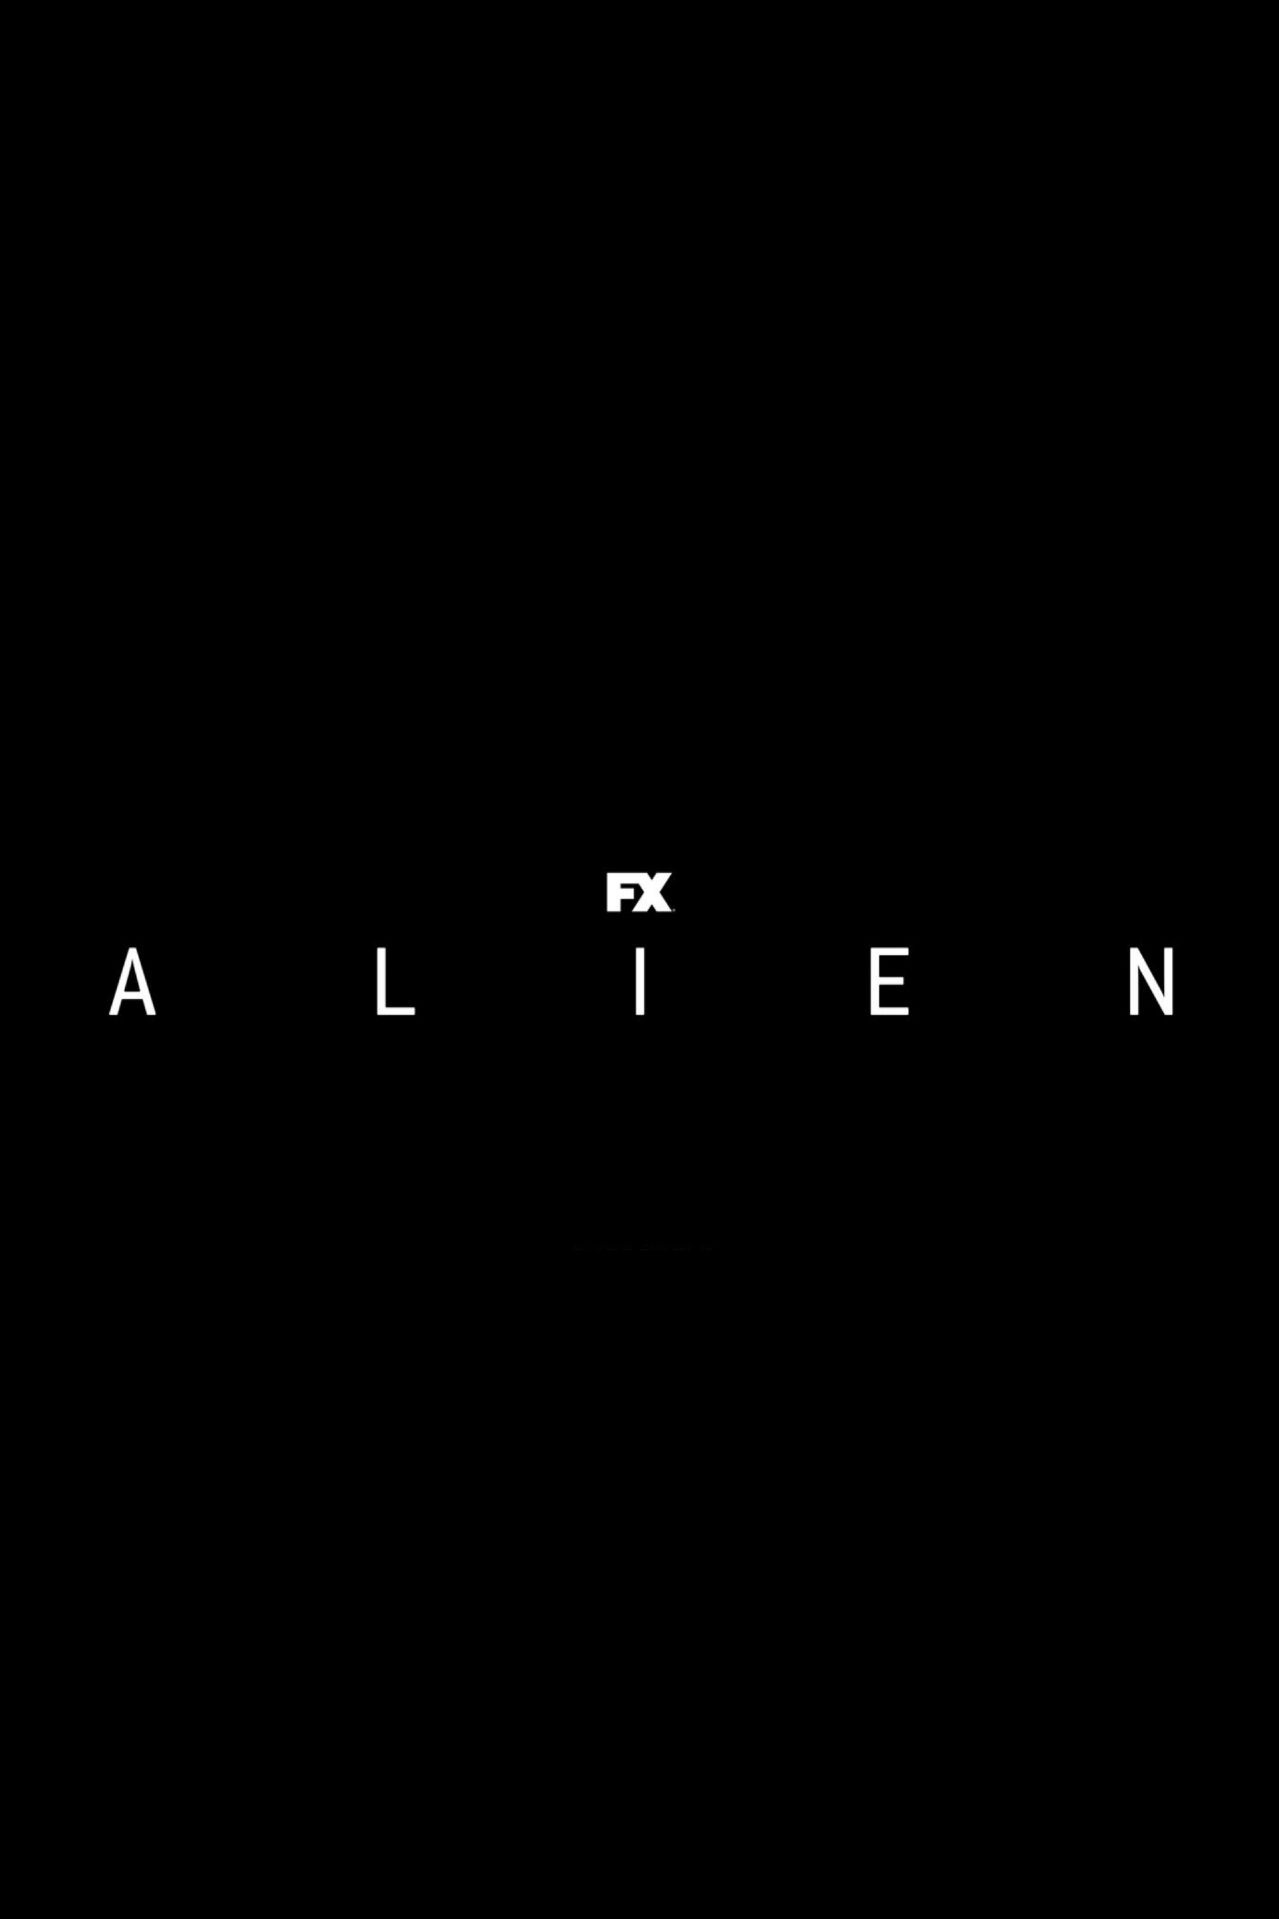 Pôster do logotipo da série de TV Alien FX